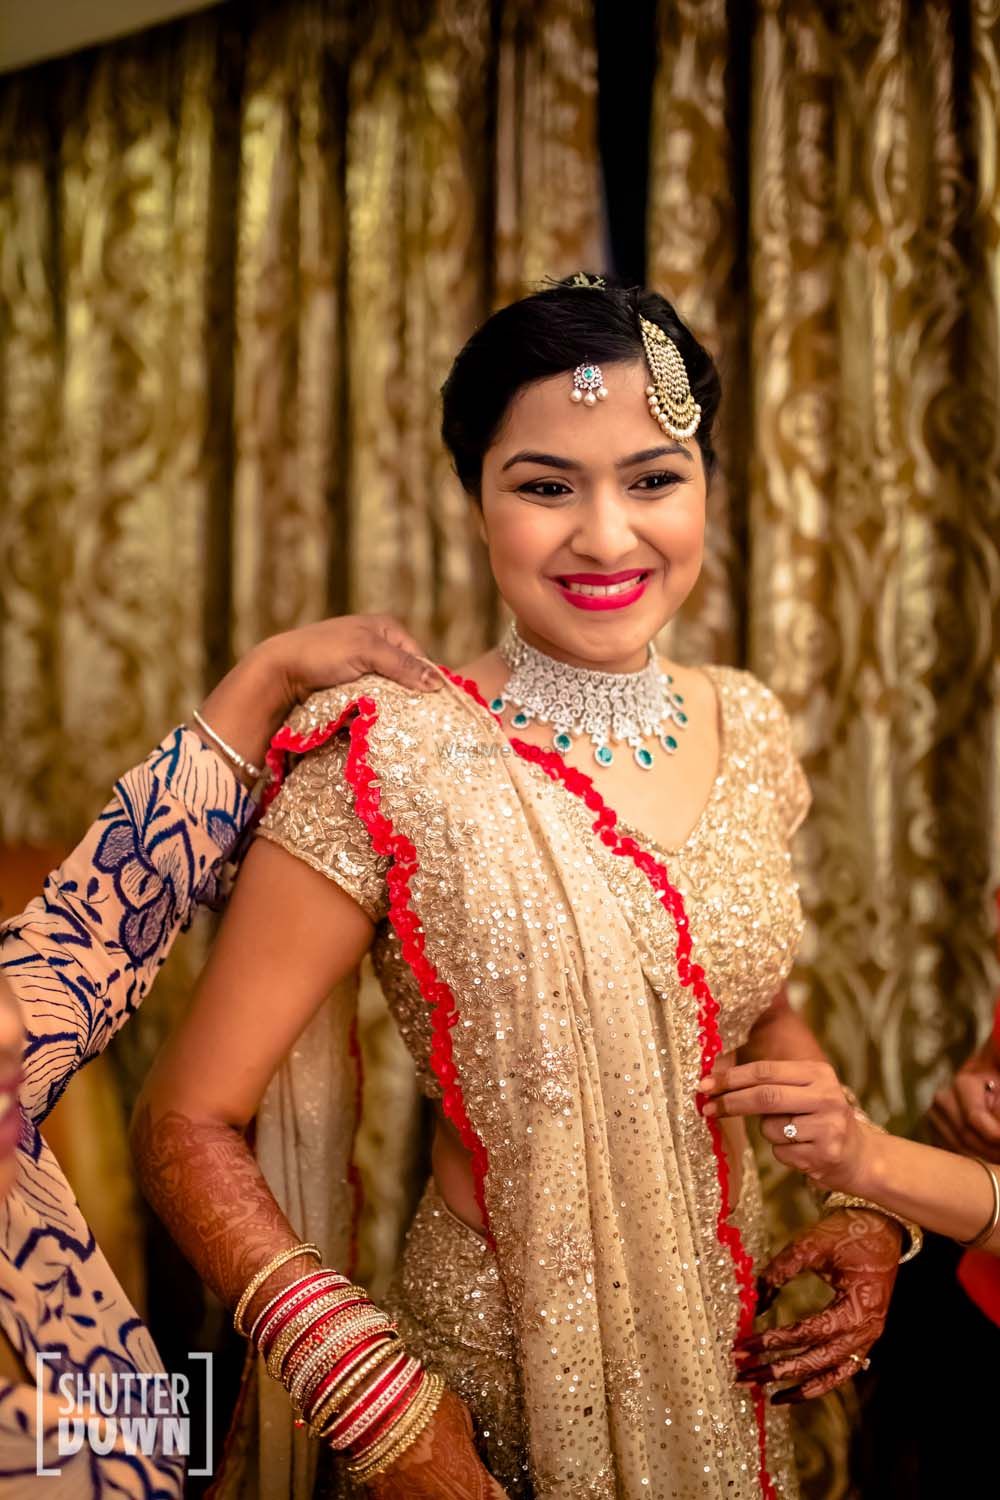 Photo From Stunning Wedding in Udaipur - By Shutterdown - Lakshya Chawla